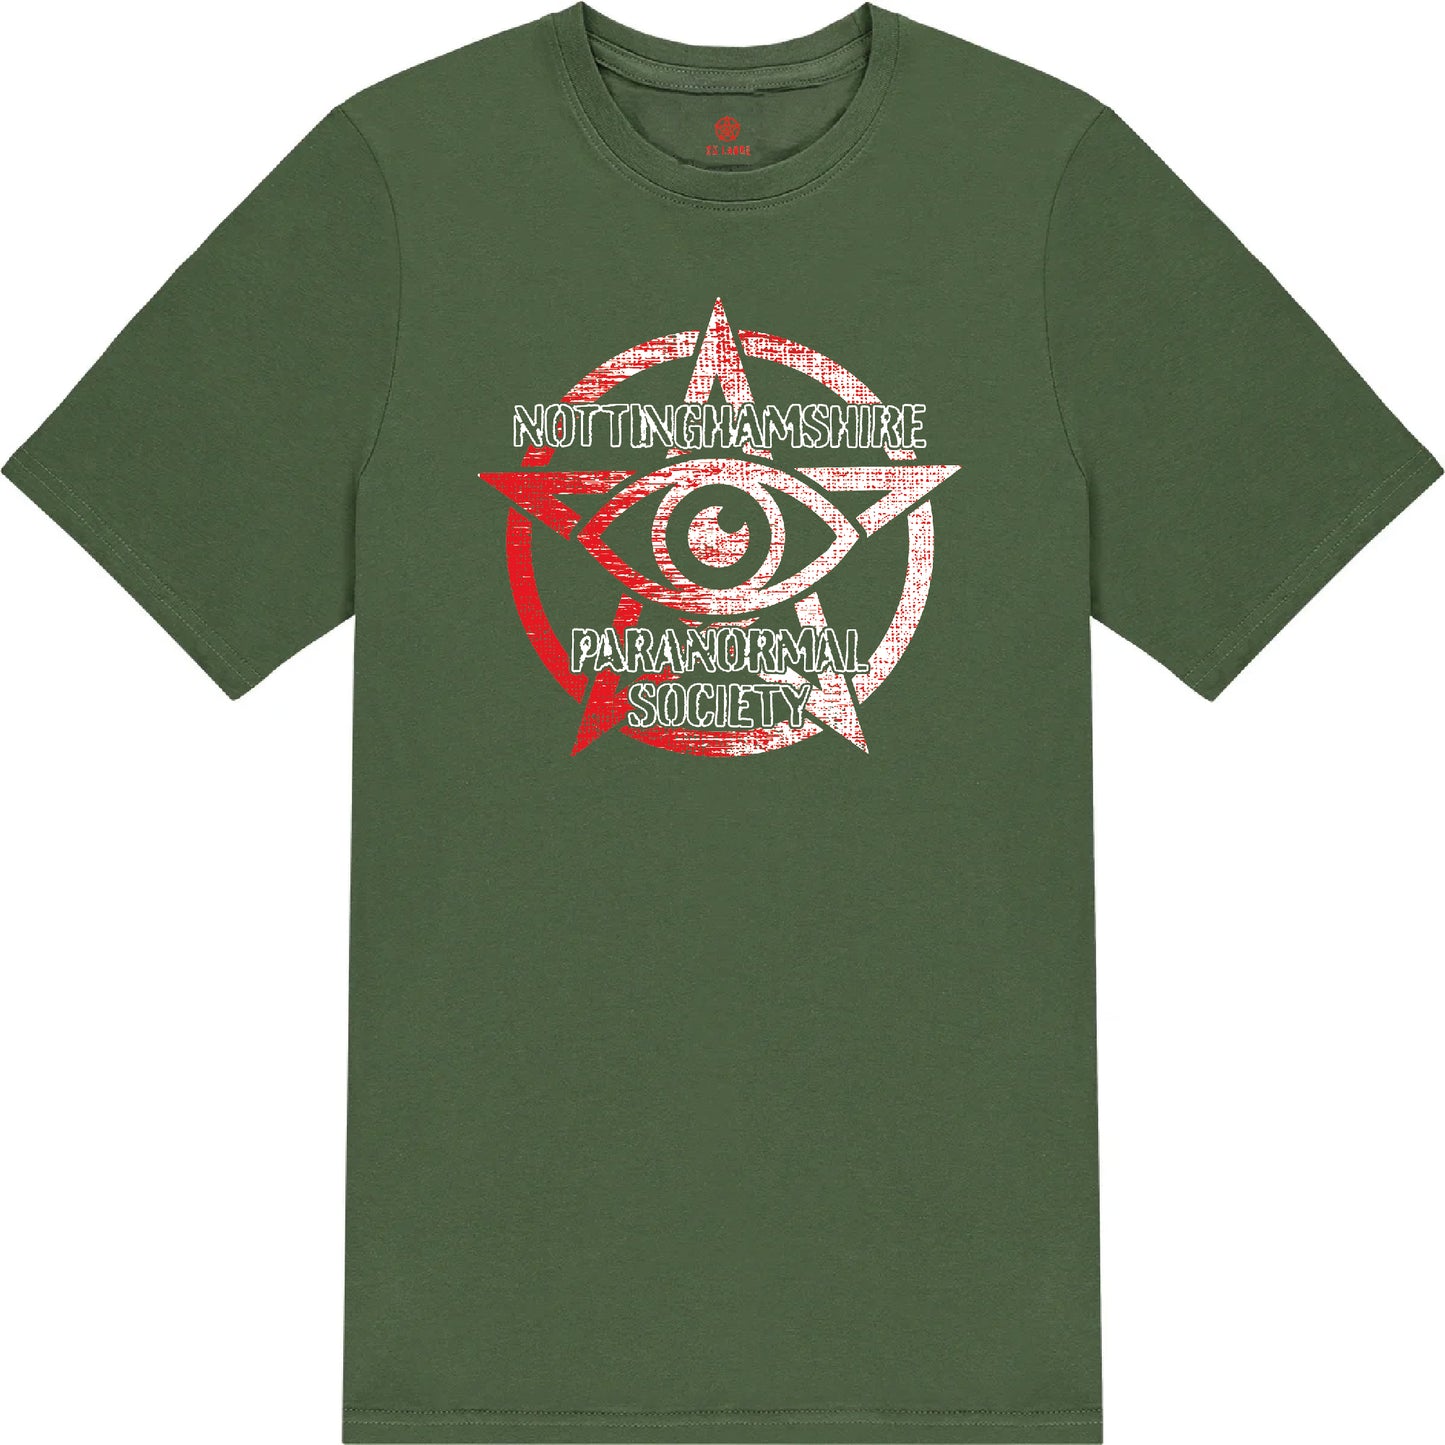 All Seeing Eye Logo T-Shirt - Original Style